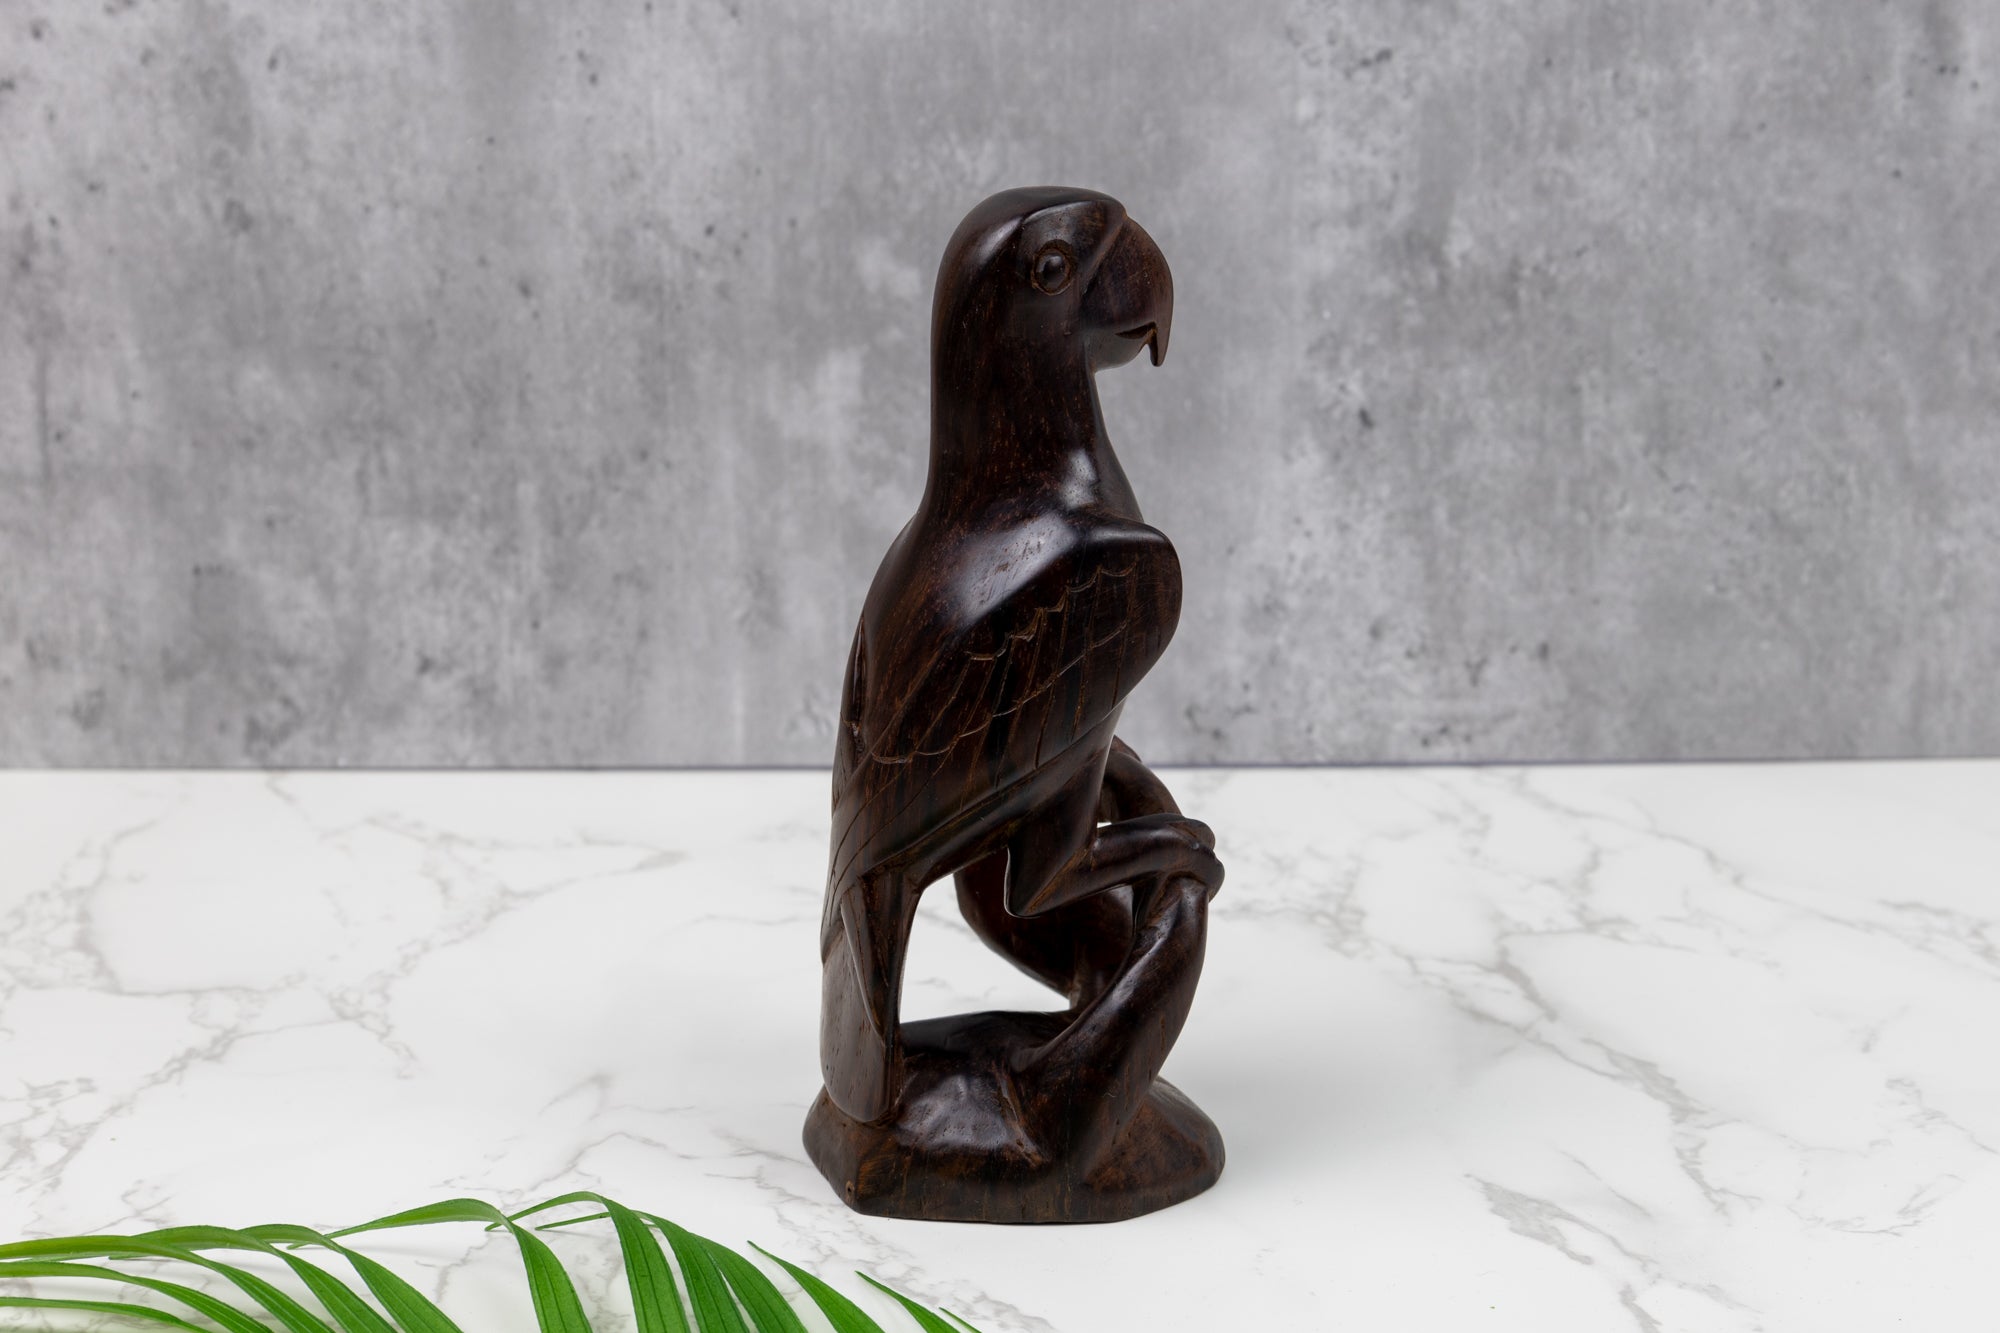 Parrot Bird Figurine, Wood Carving